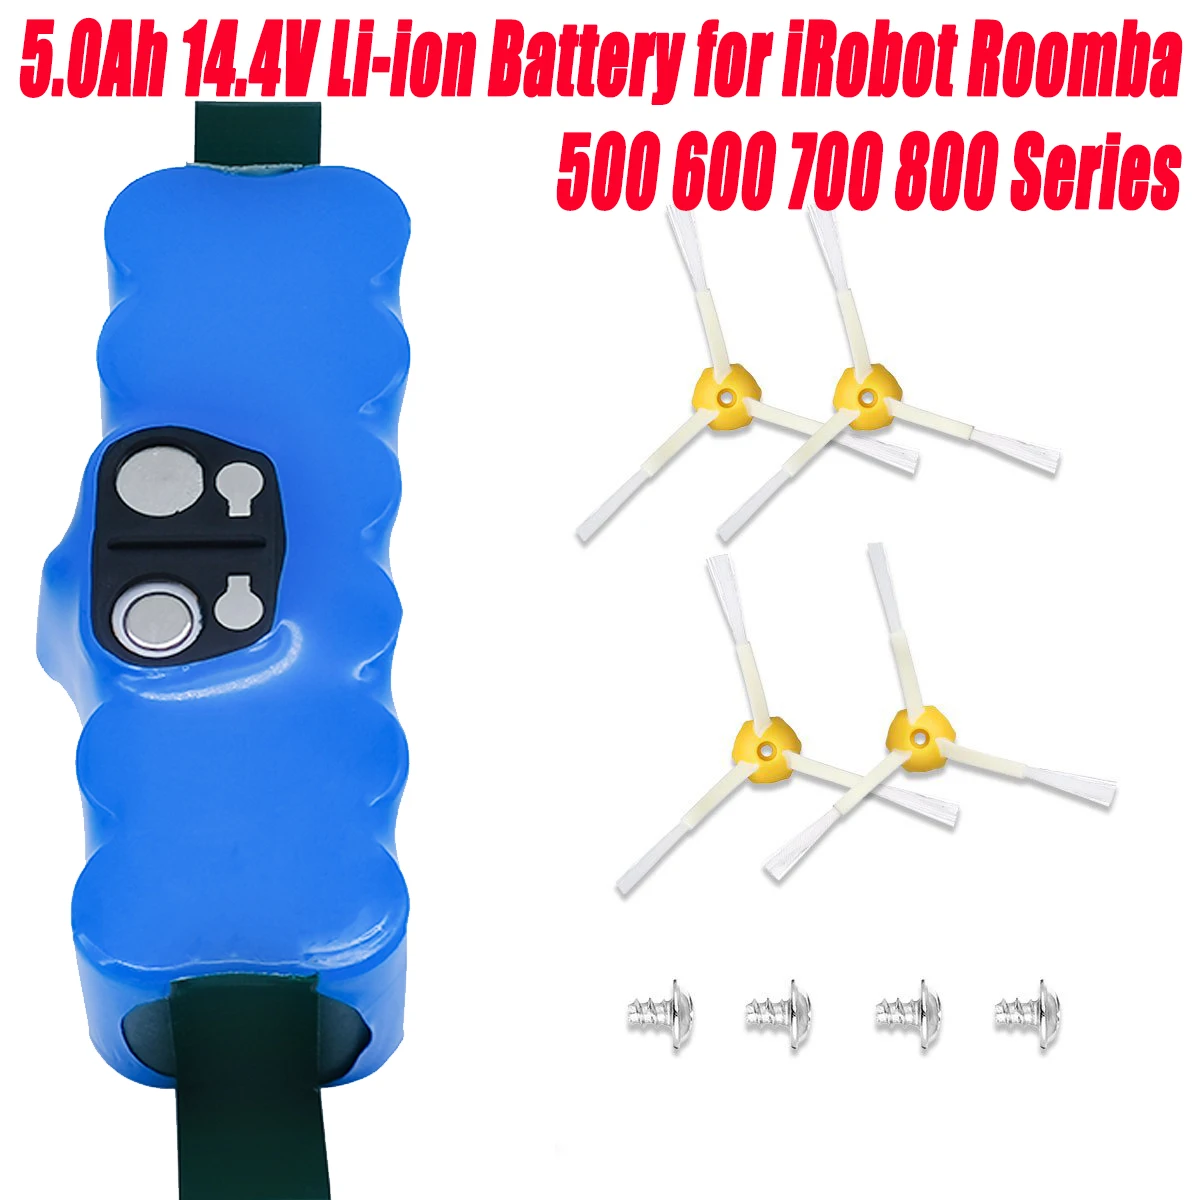 Batteria per iRobot Roomba 500 600 700 800 serie 5.0Ah 14.4V li